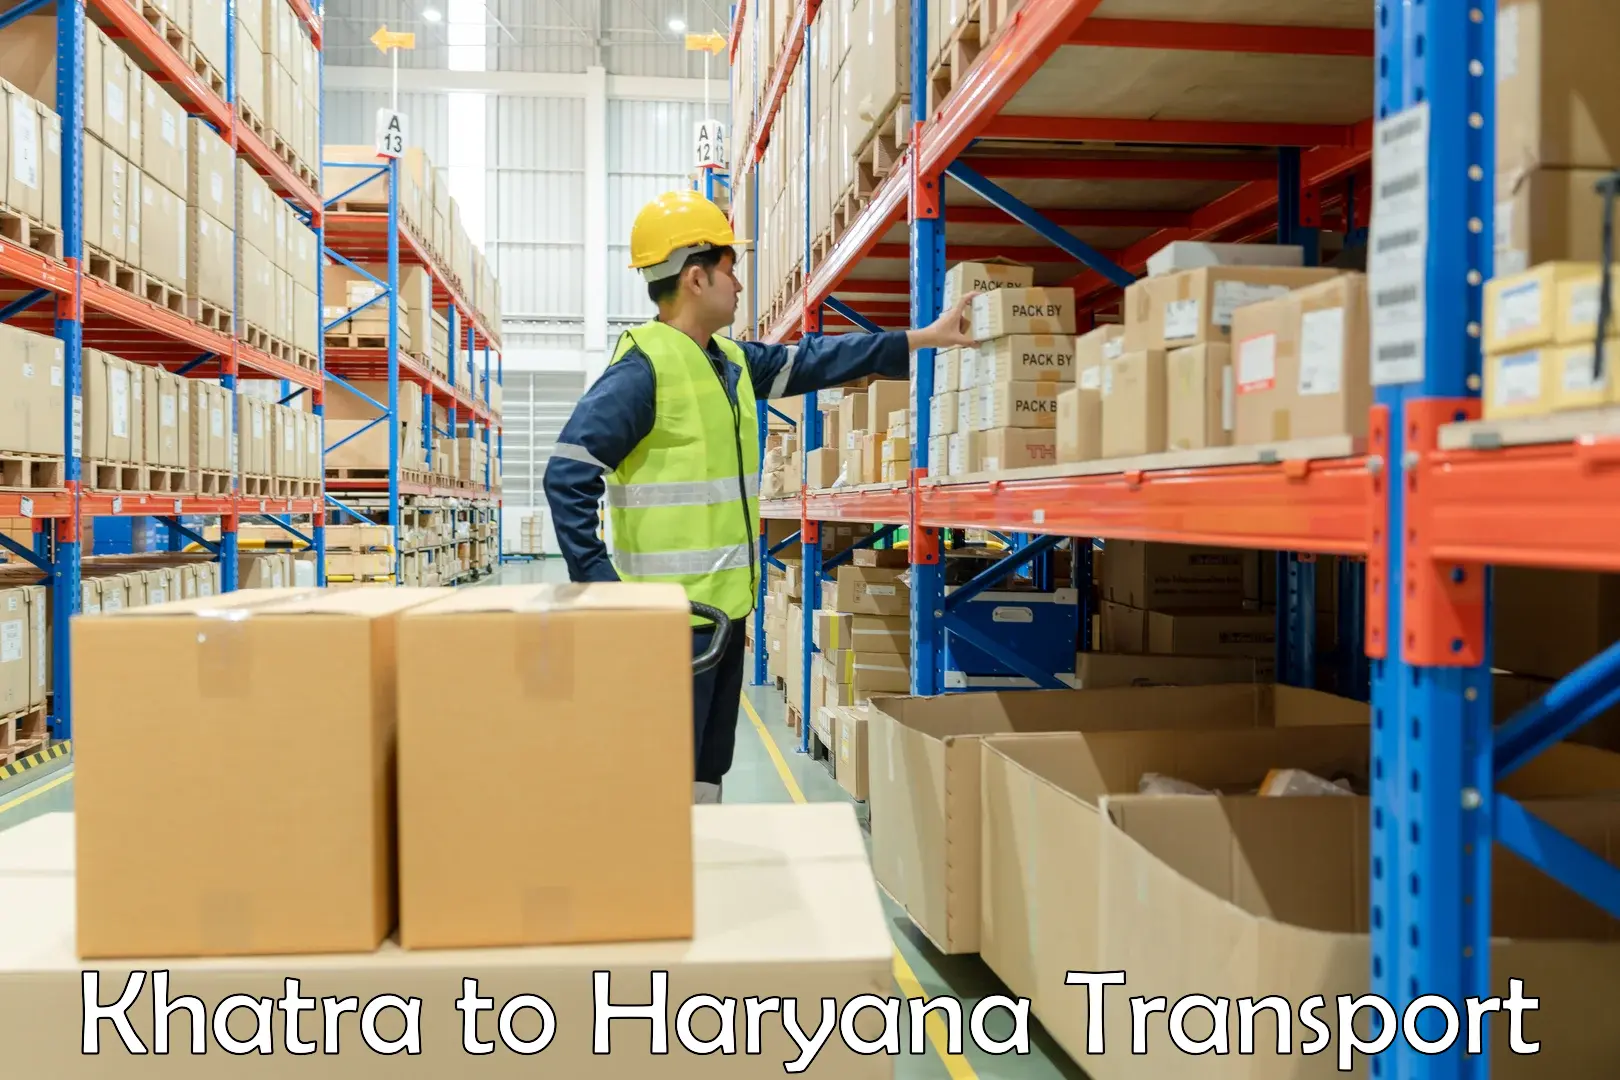 Goods delivery service Khatra to Haryana